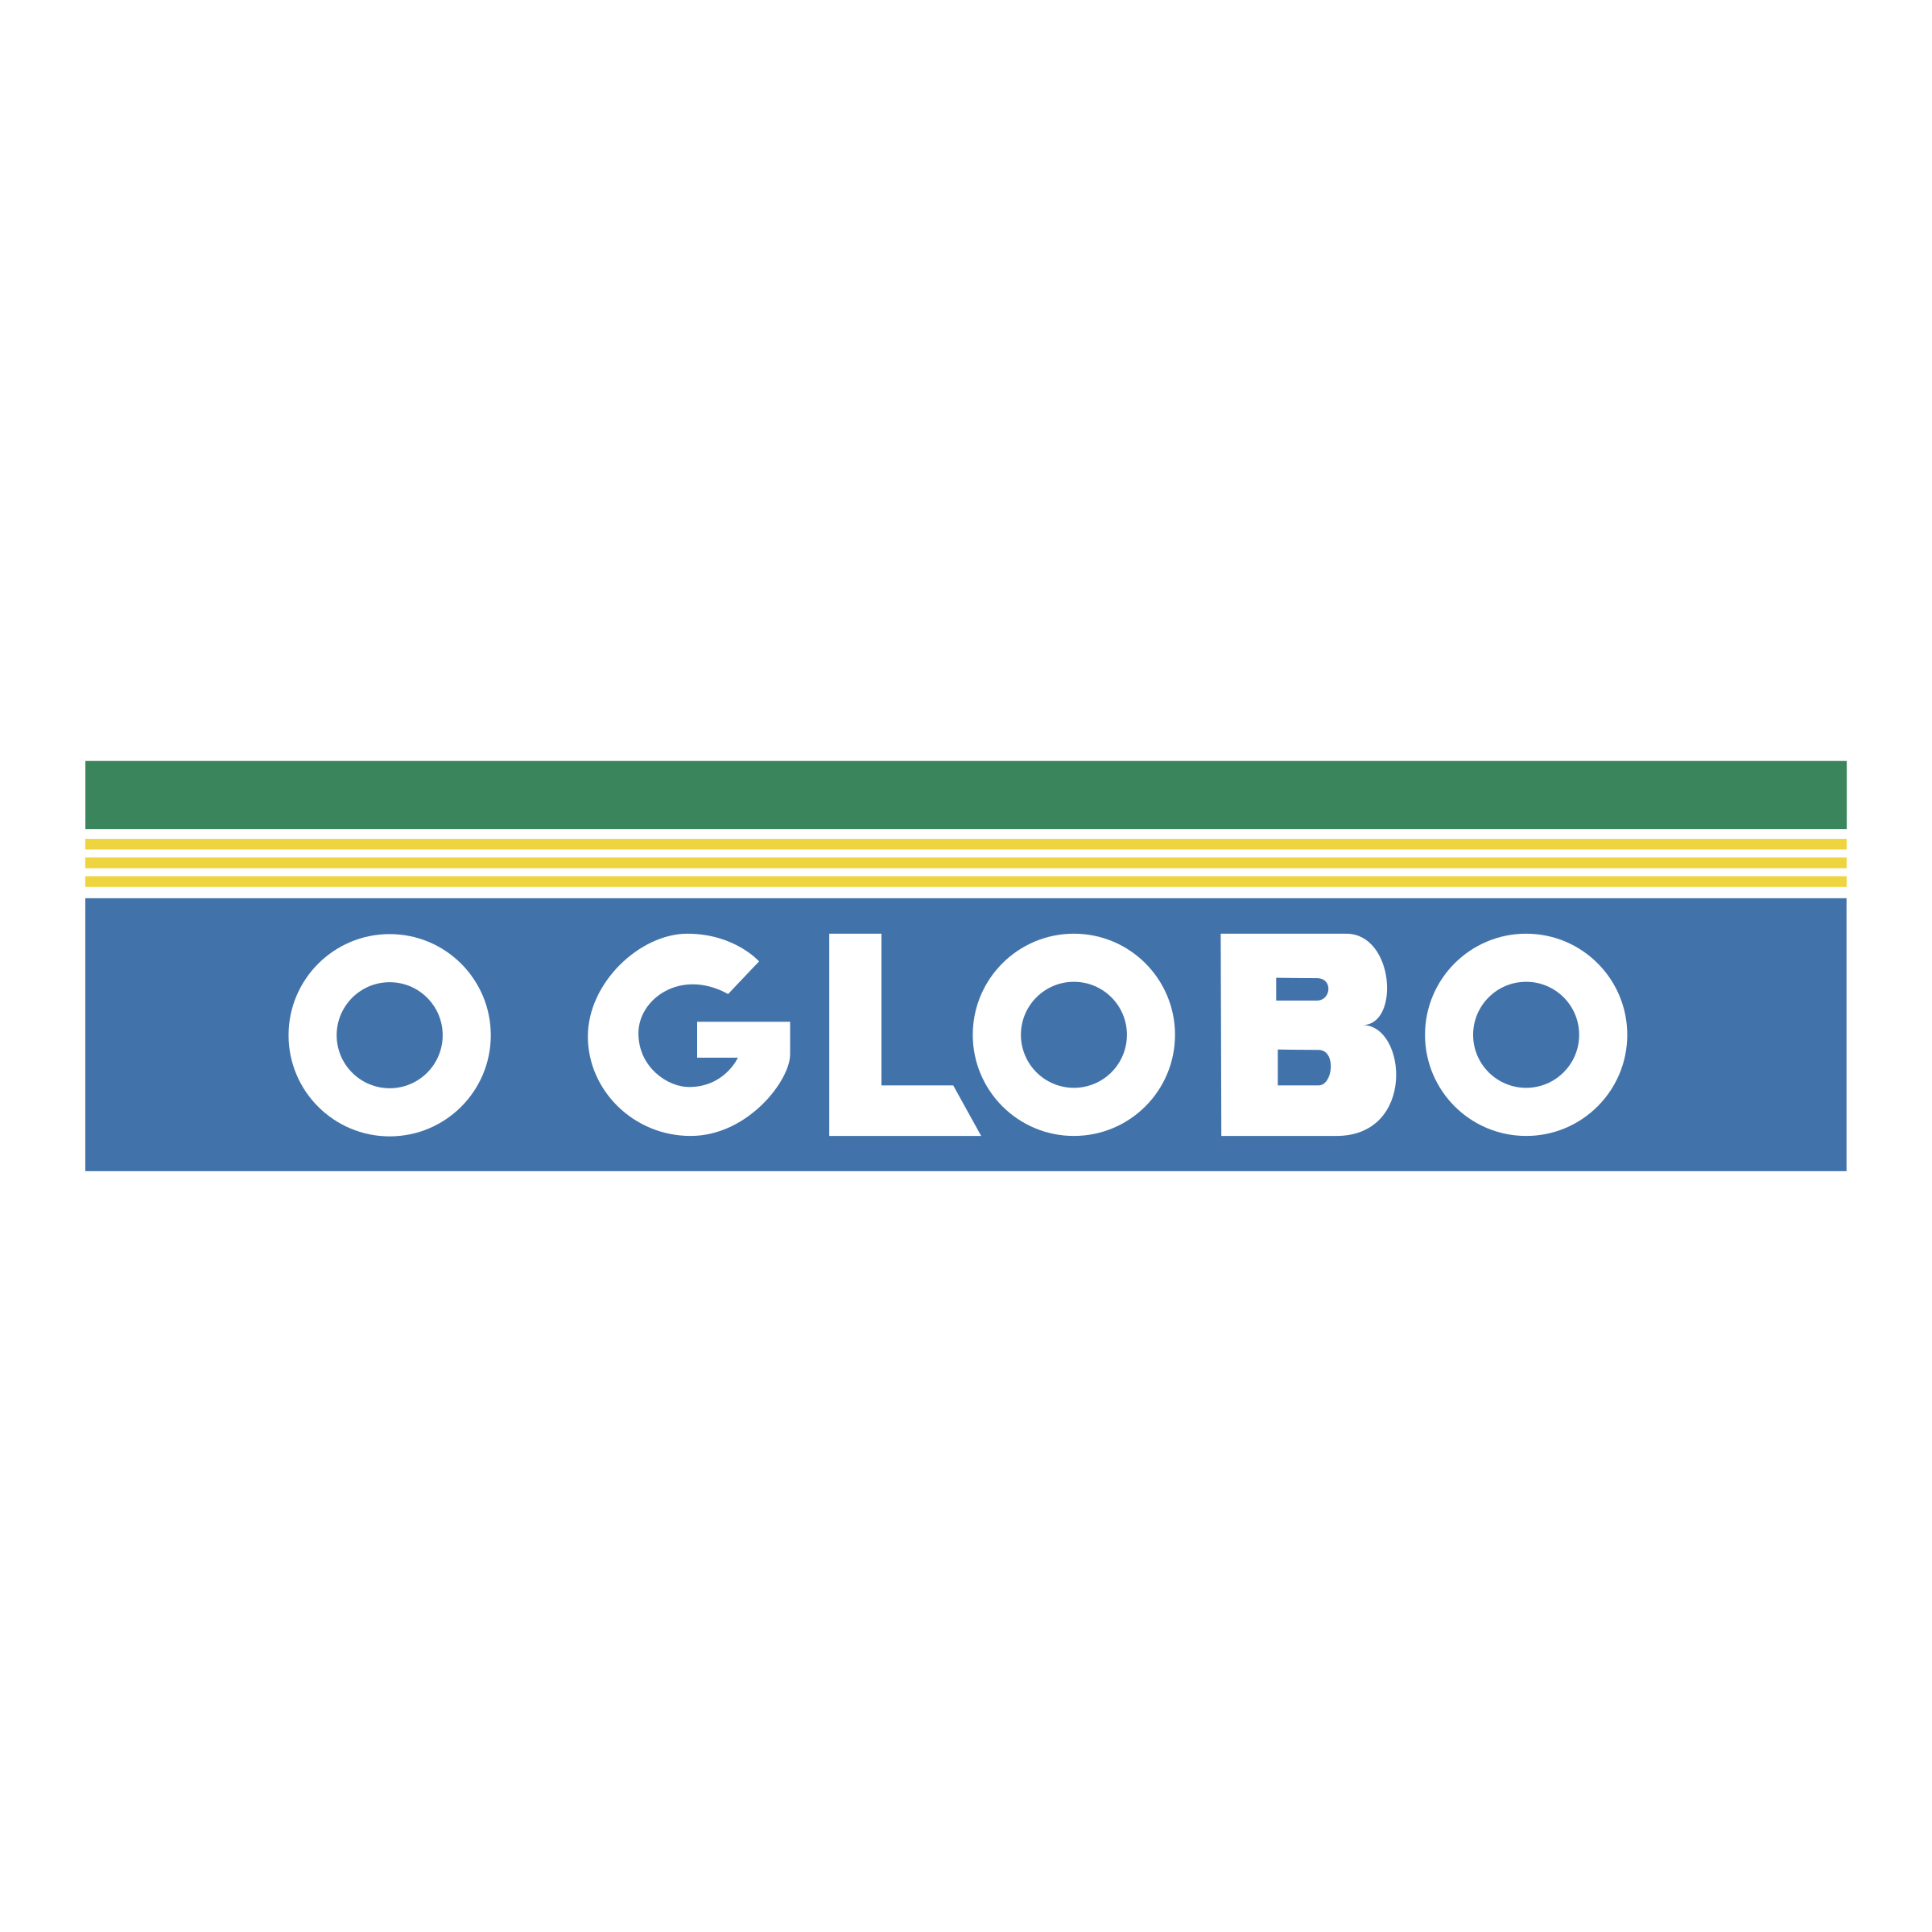 Globo Logo - O Globo Logo PNG Transparent & SVG Vector